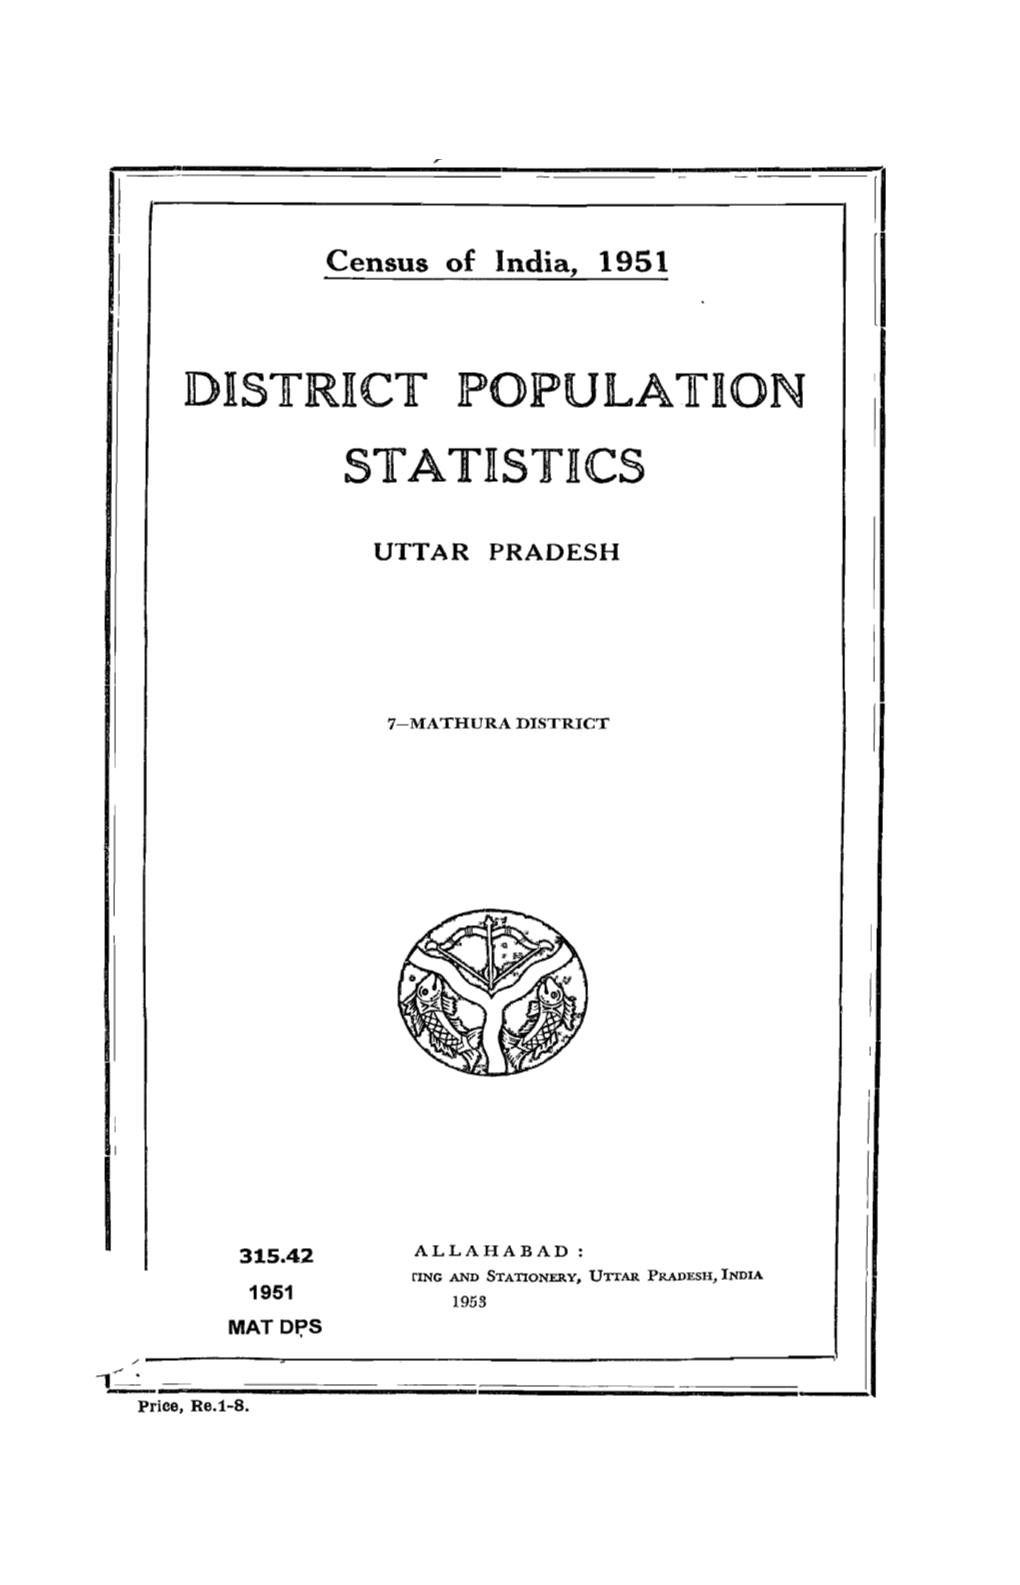 District Population Statistics, 7-Mathura, Uttar Pradesh